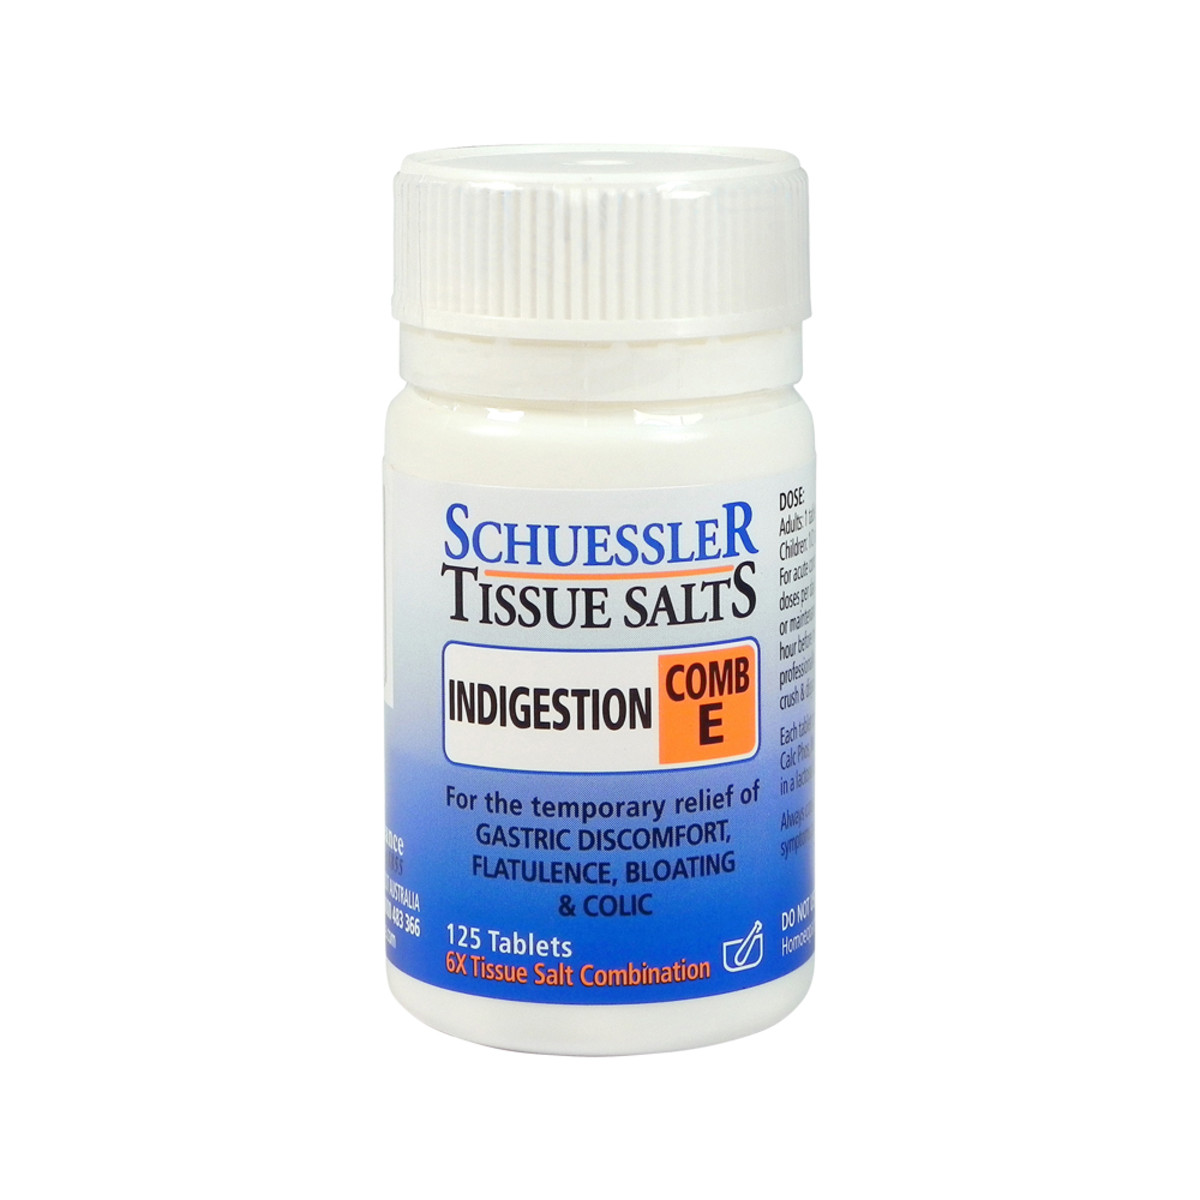 Schuessler Tissue Salts Comb E (Indigestion) 125t